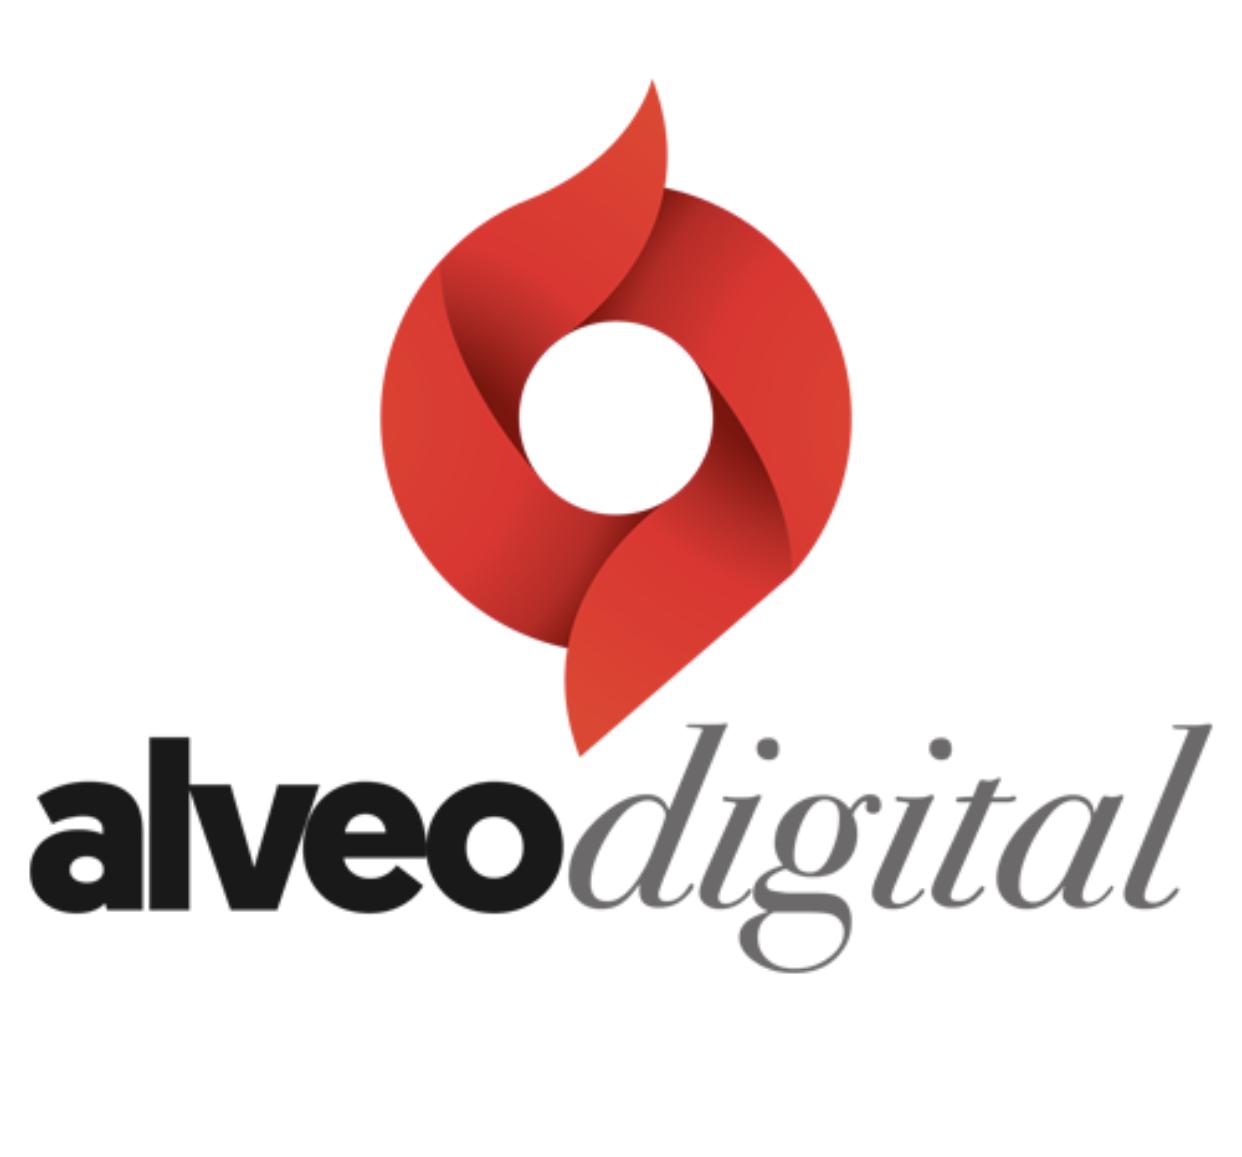 Alveo Digital, LLC. profile on Qualified.One